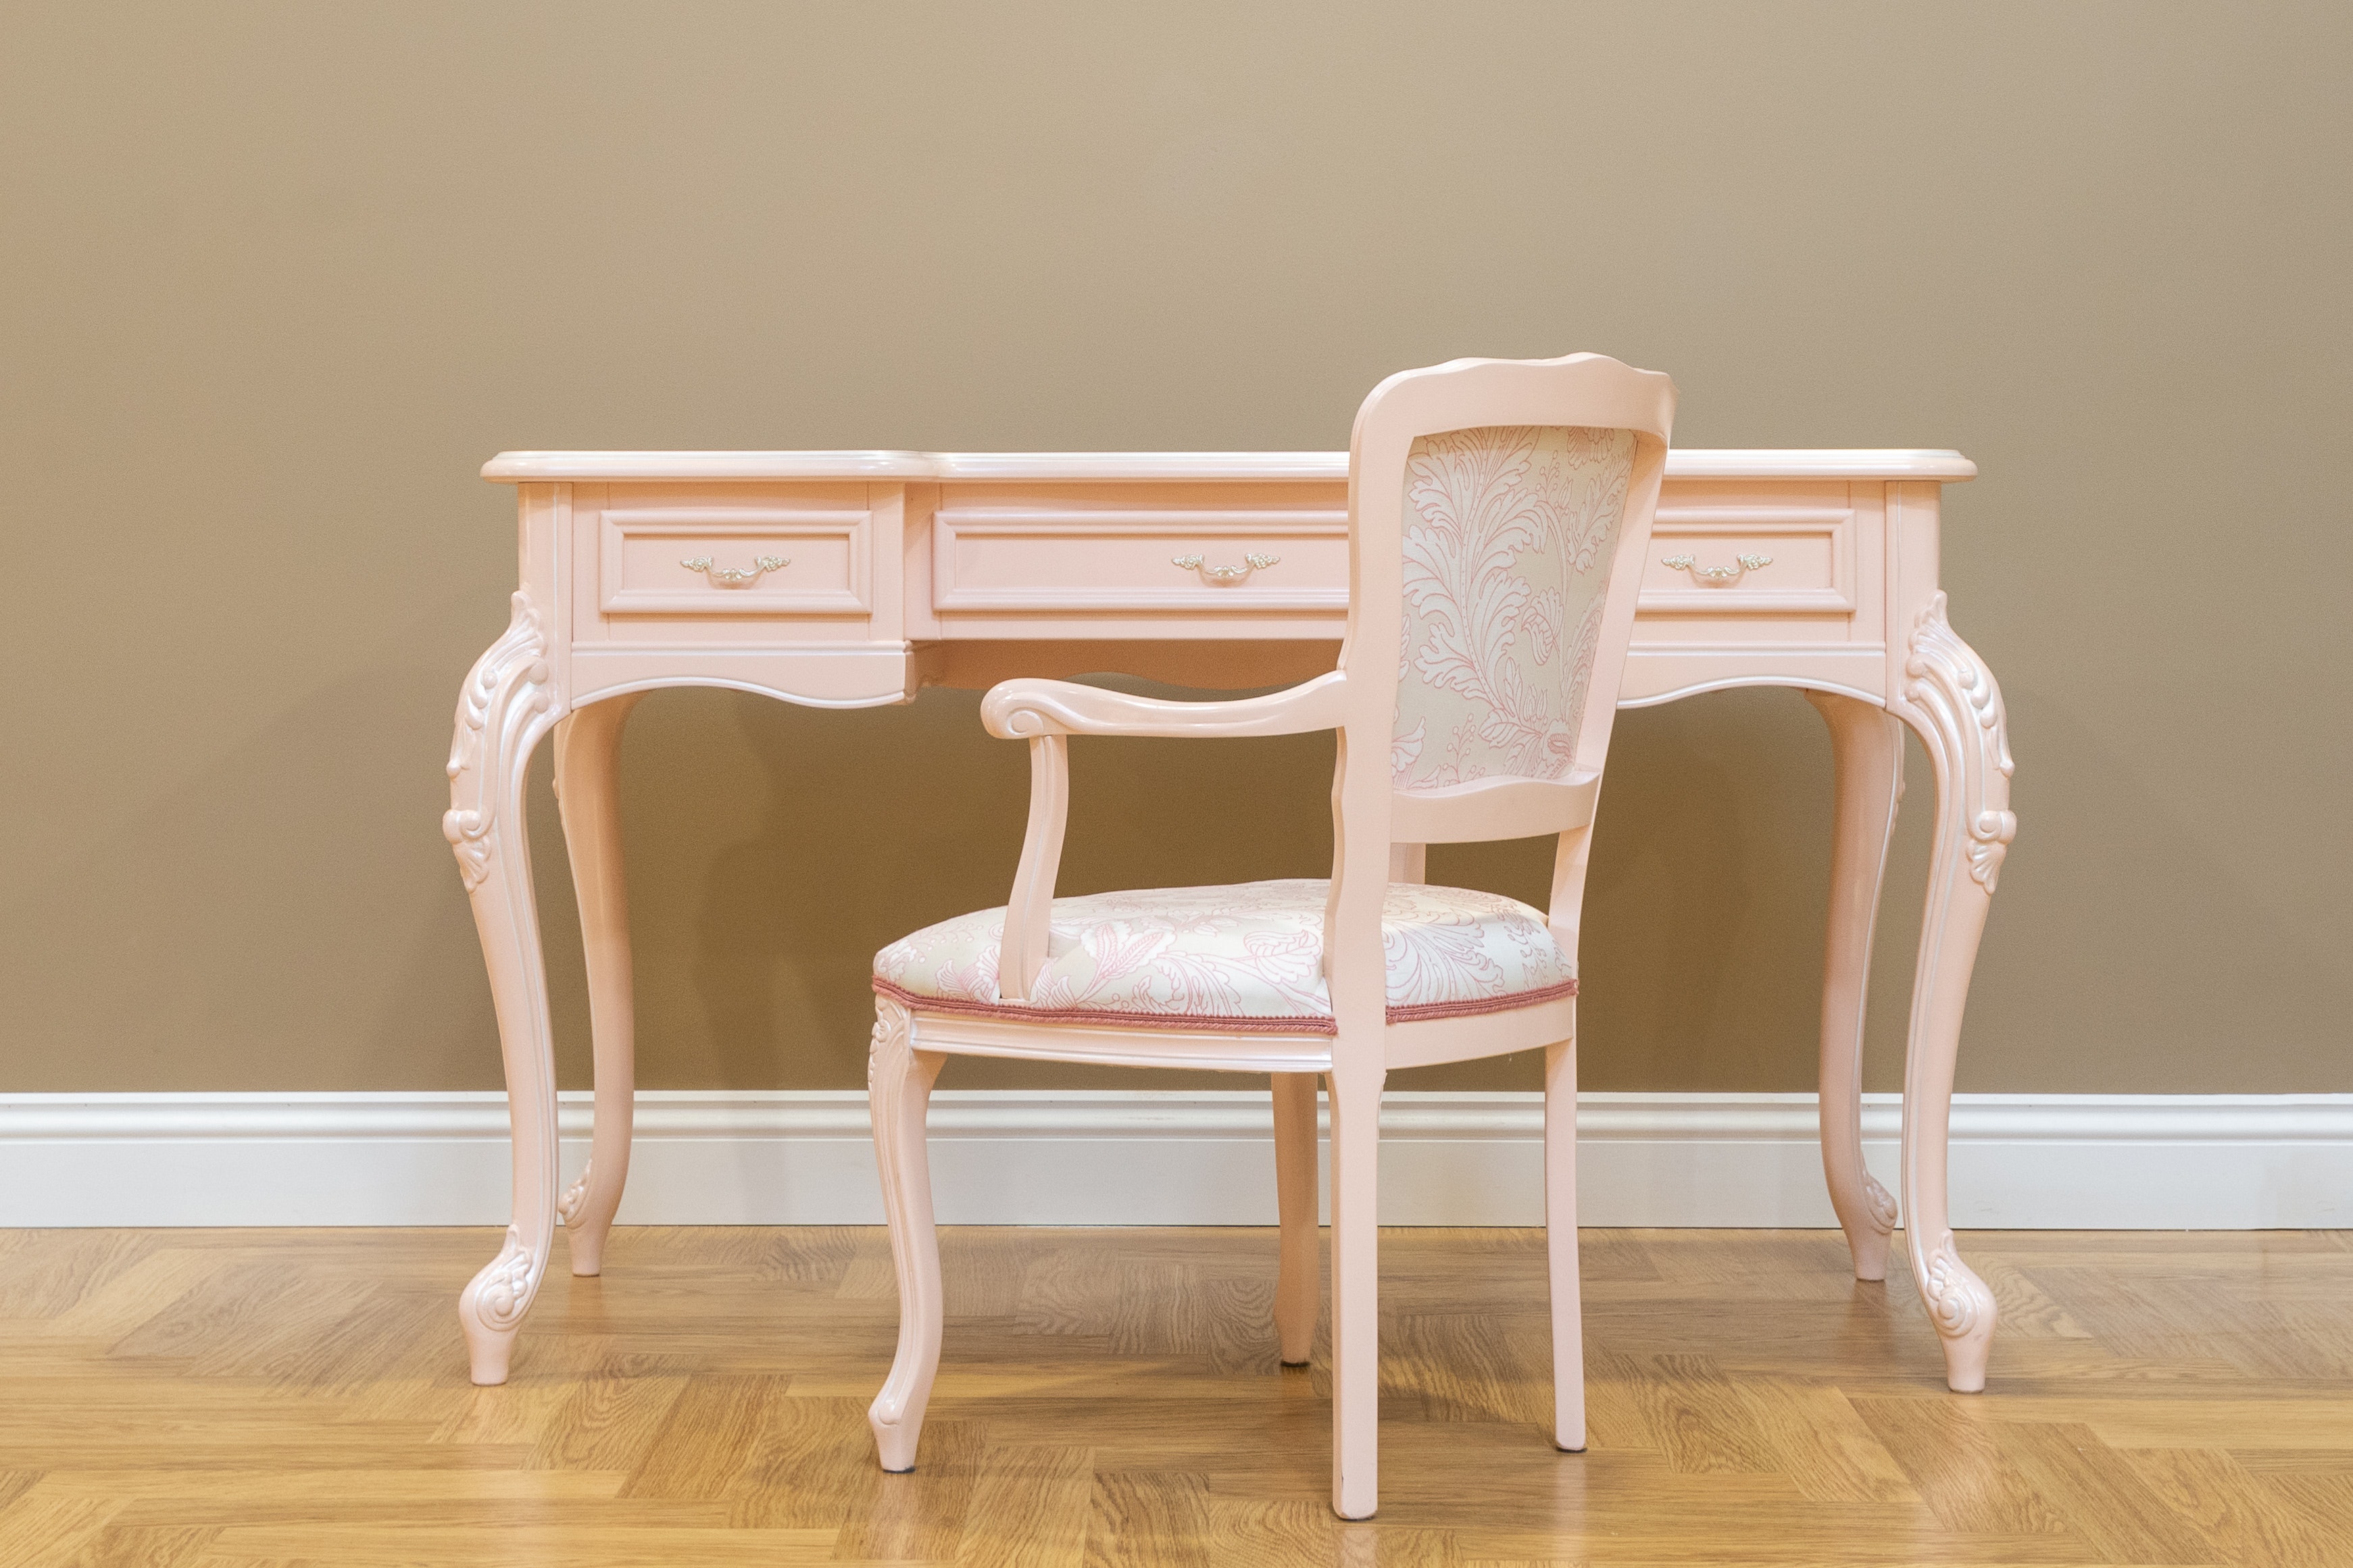 pink desk chair